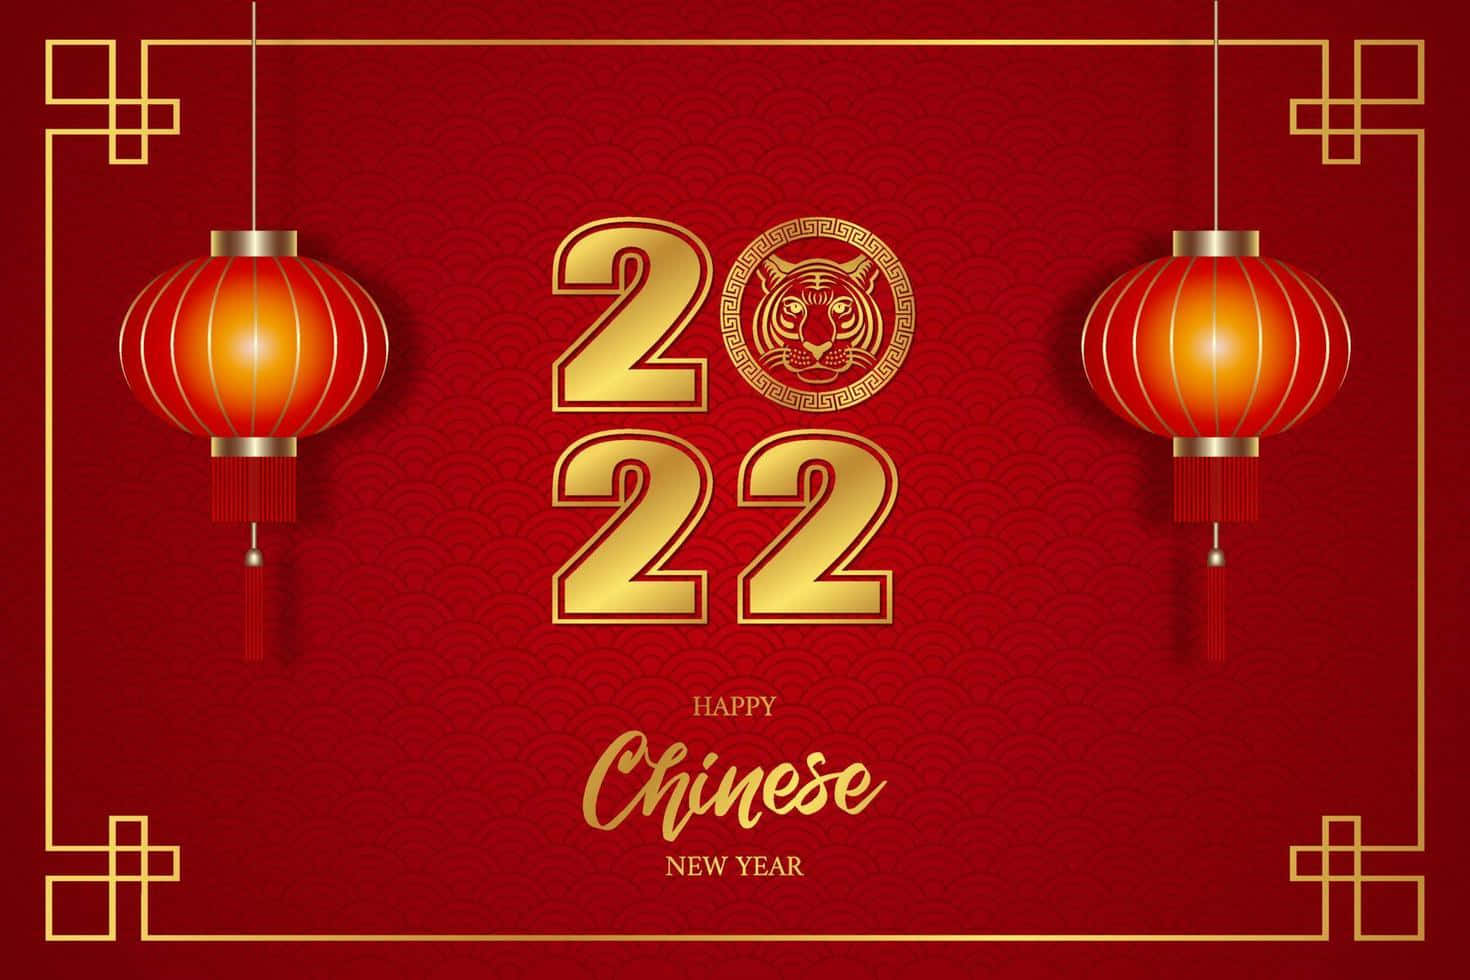 Kinesisknytår 2020 Med Gyldne Lanterner Og Rød Baggrund